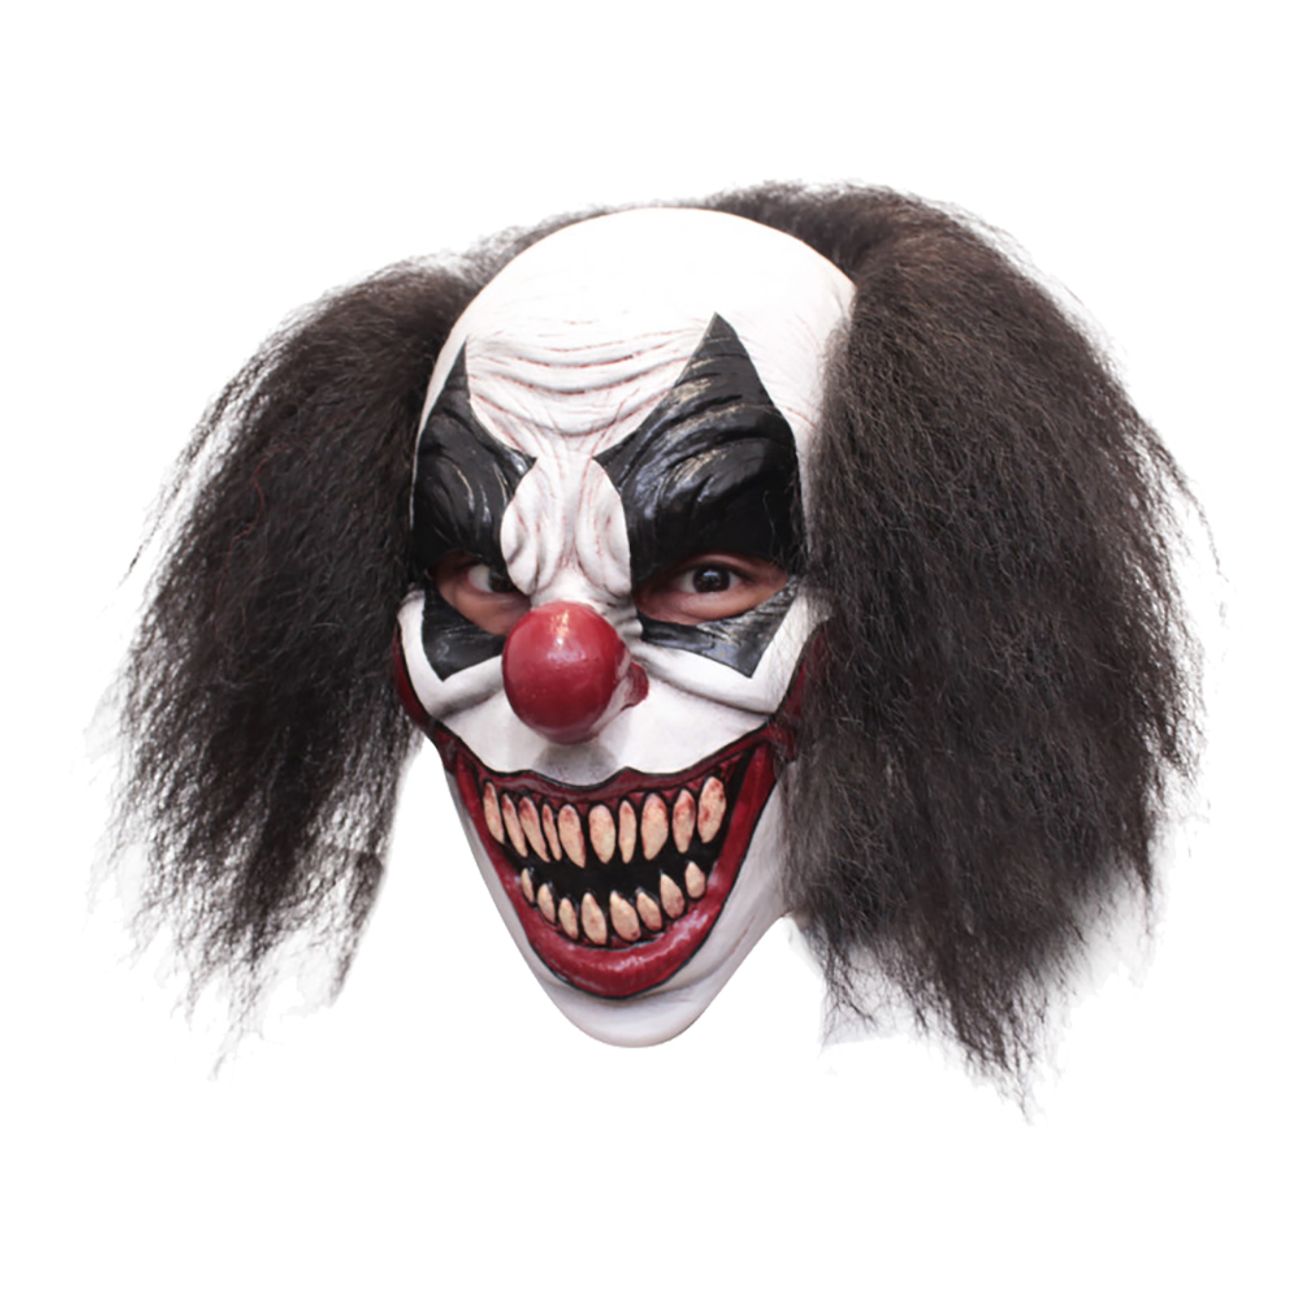 darky-the-clown-mask-85358-1